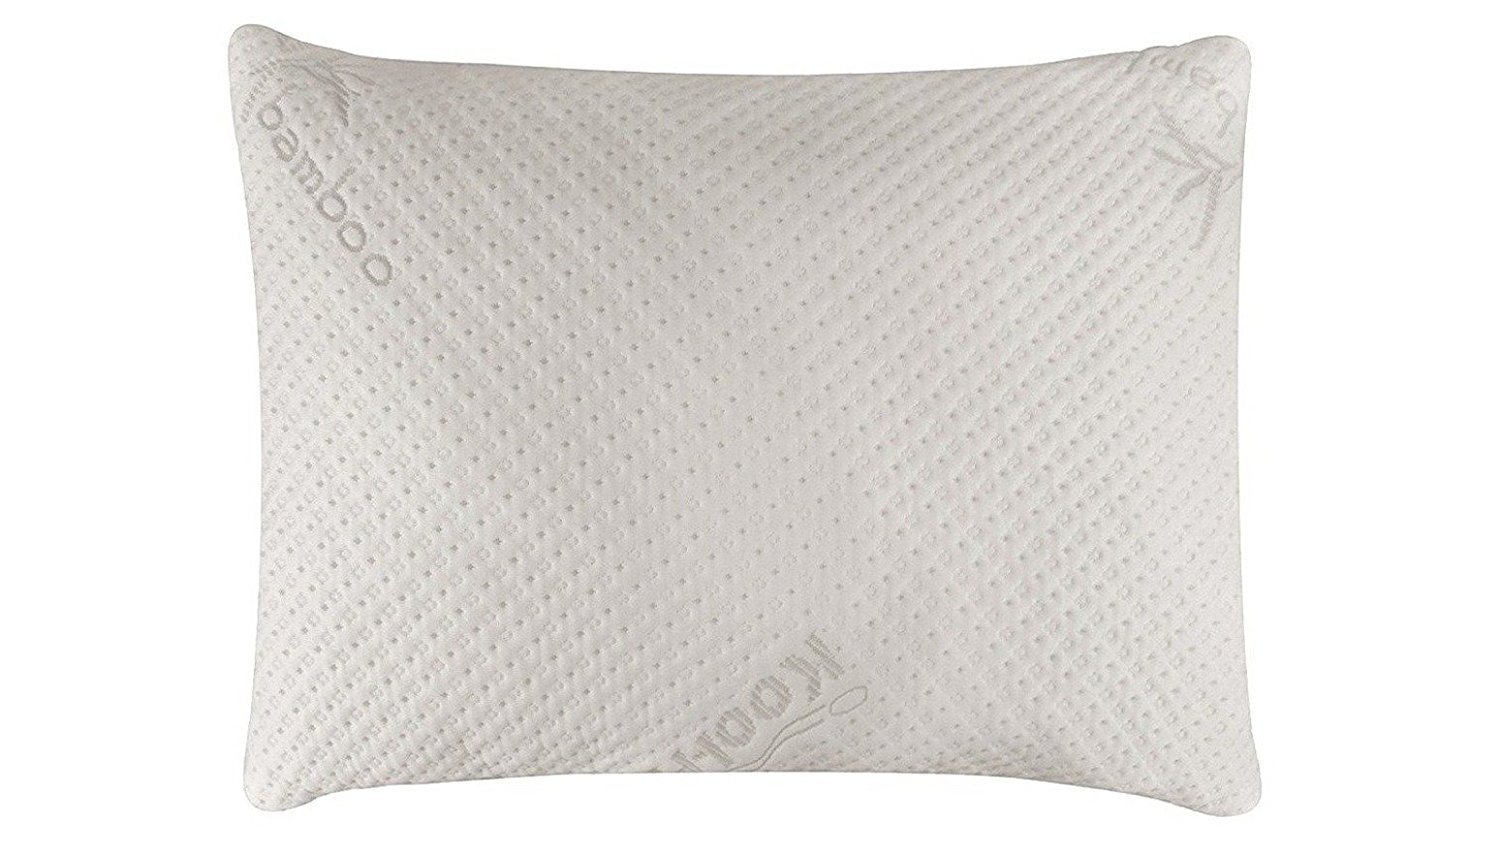 Snuggle-Pedic Ultra-Luxury Bamboo Shredded Memory Foam Pillow​